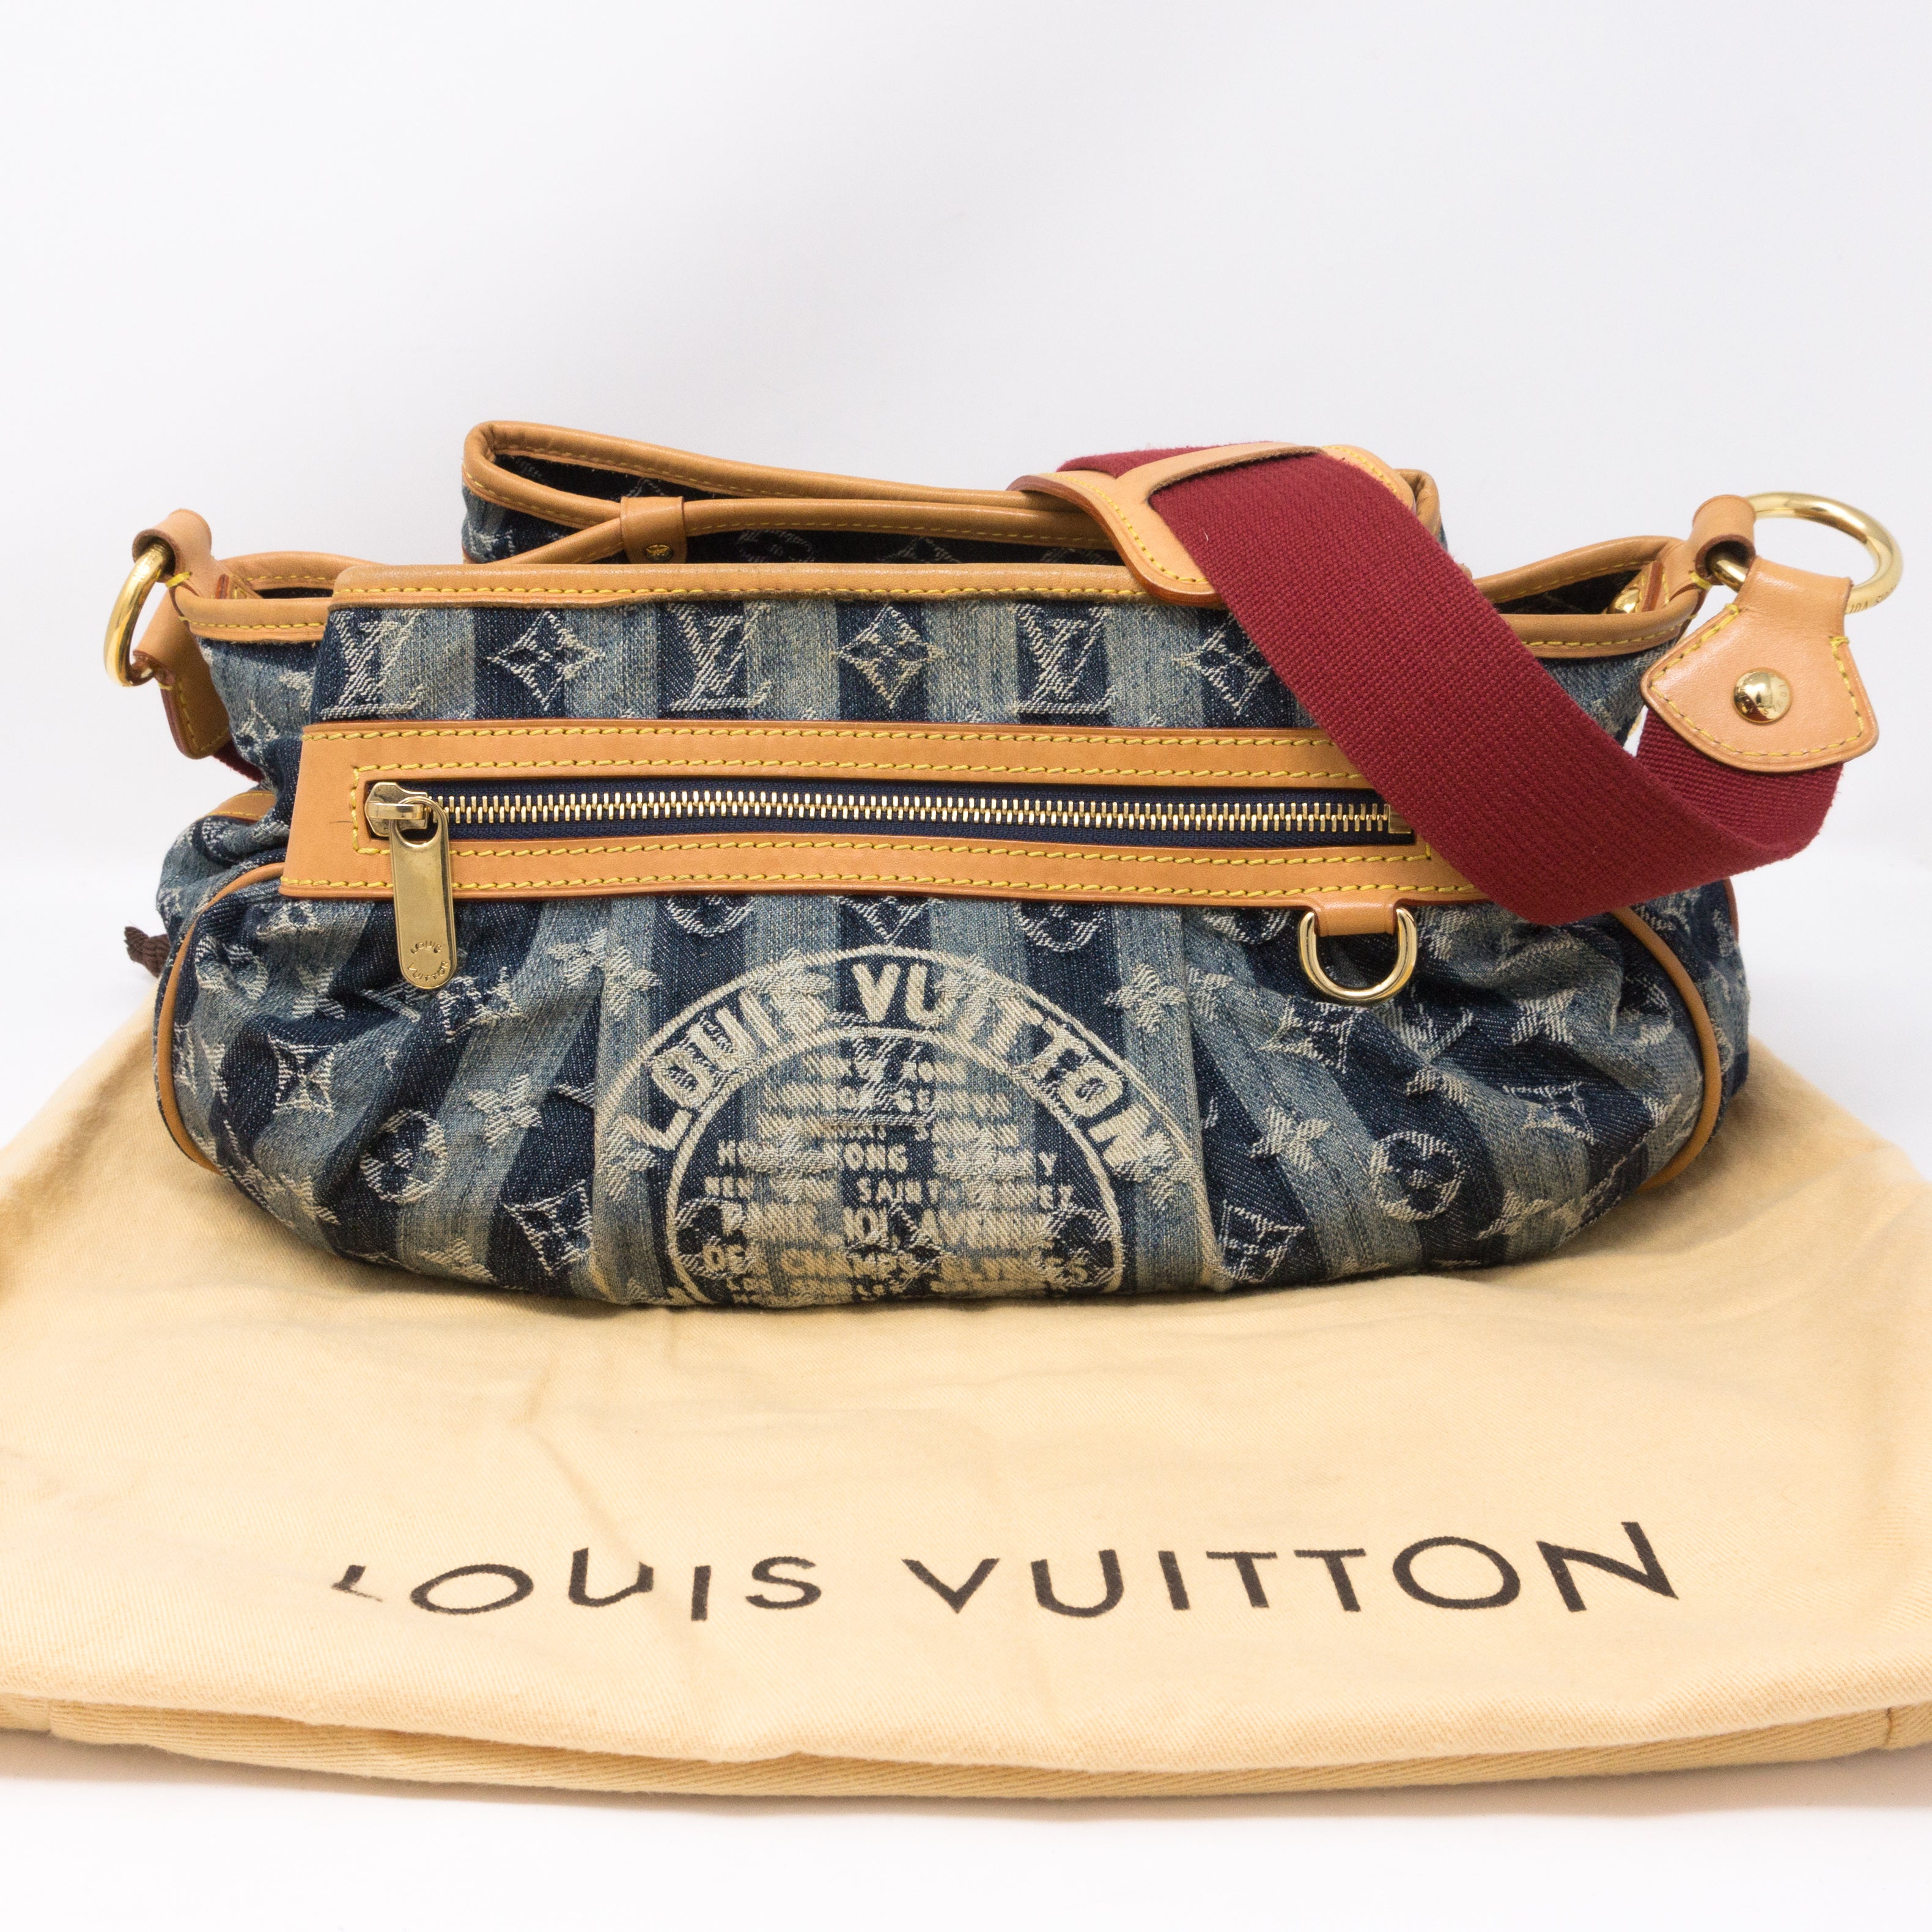 Sold at Auction: LOUIS VUITTON DENIM PORTE EPAULE CRUISE RAYE CABAS GM